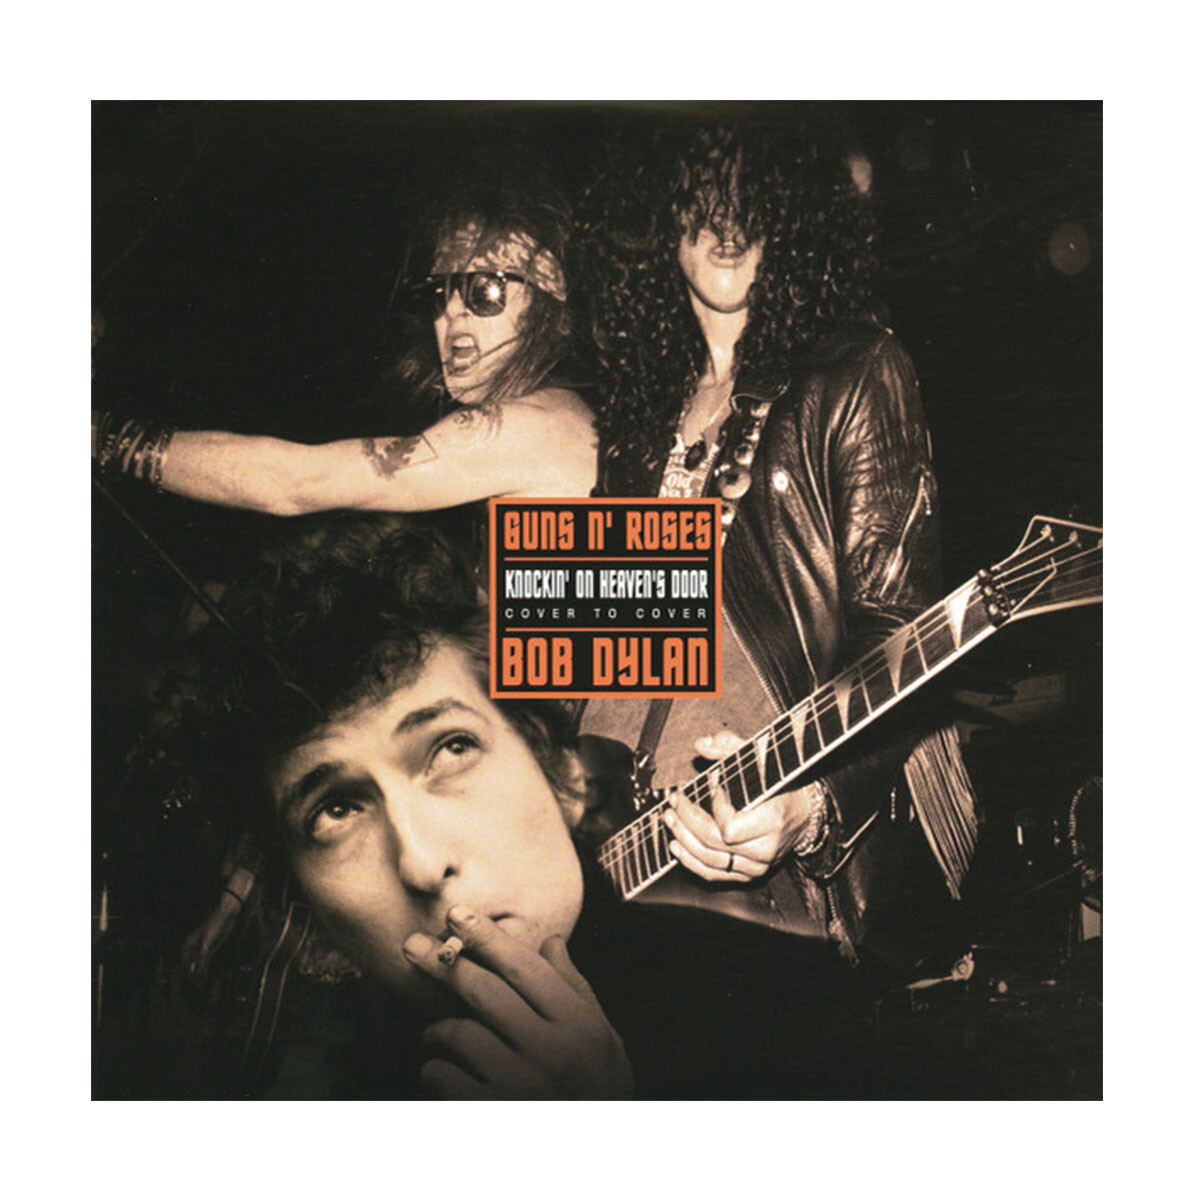 Bob Dylan / Guns N' Roses - Knockin' On Heaven's Door (picture